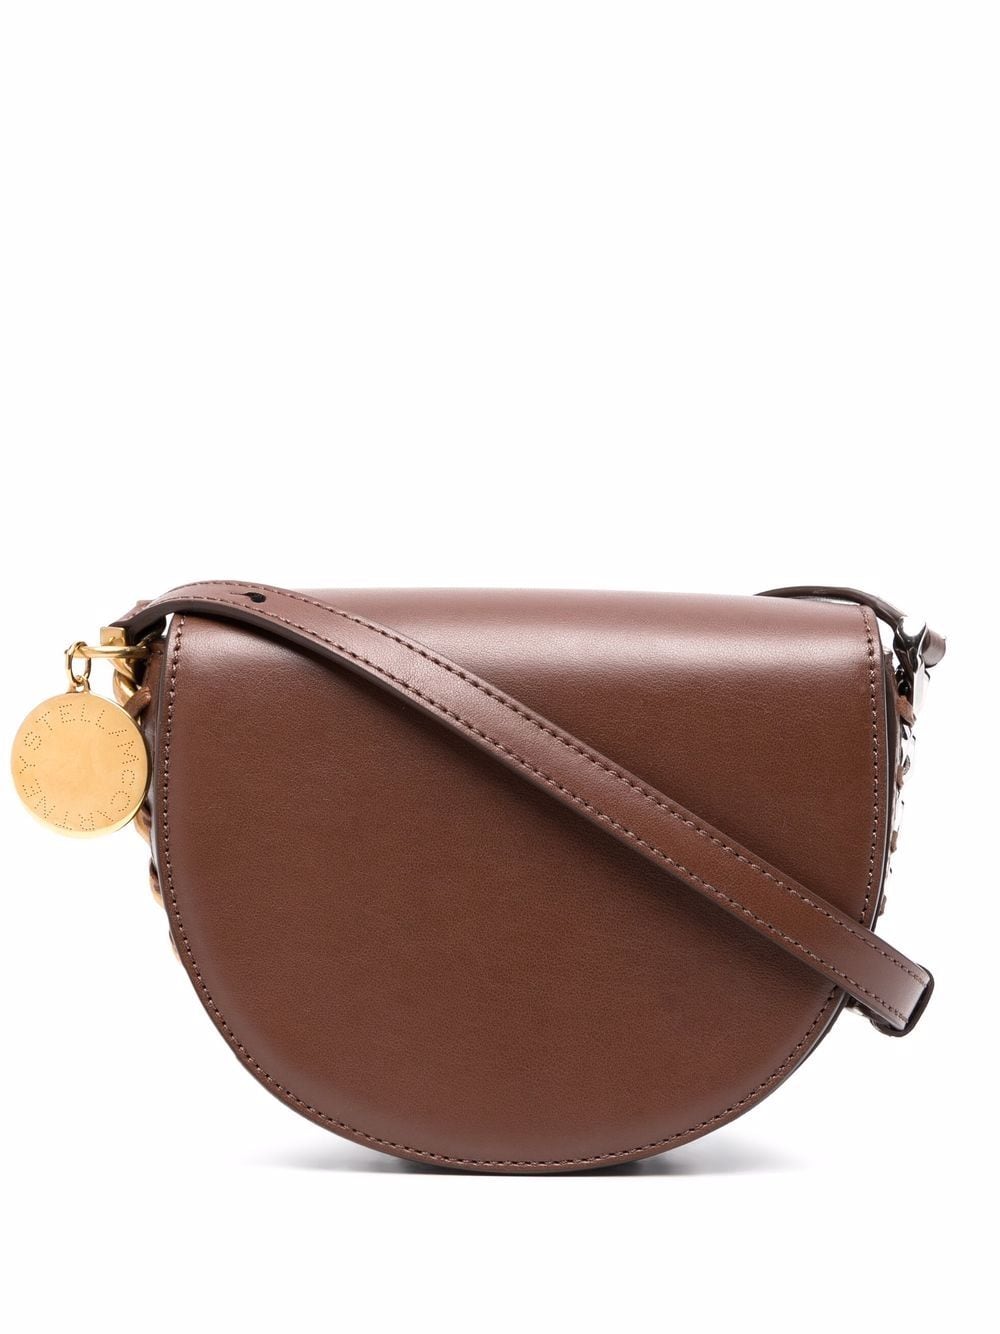 Stella McCartney chain-link detail shoulder bag - Brown